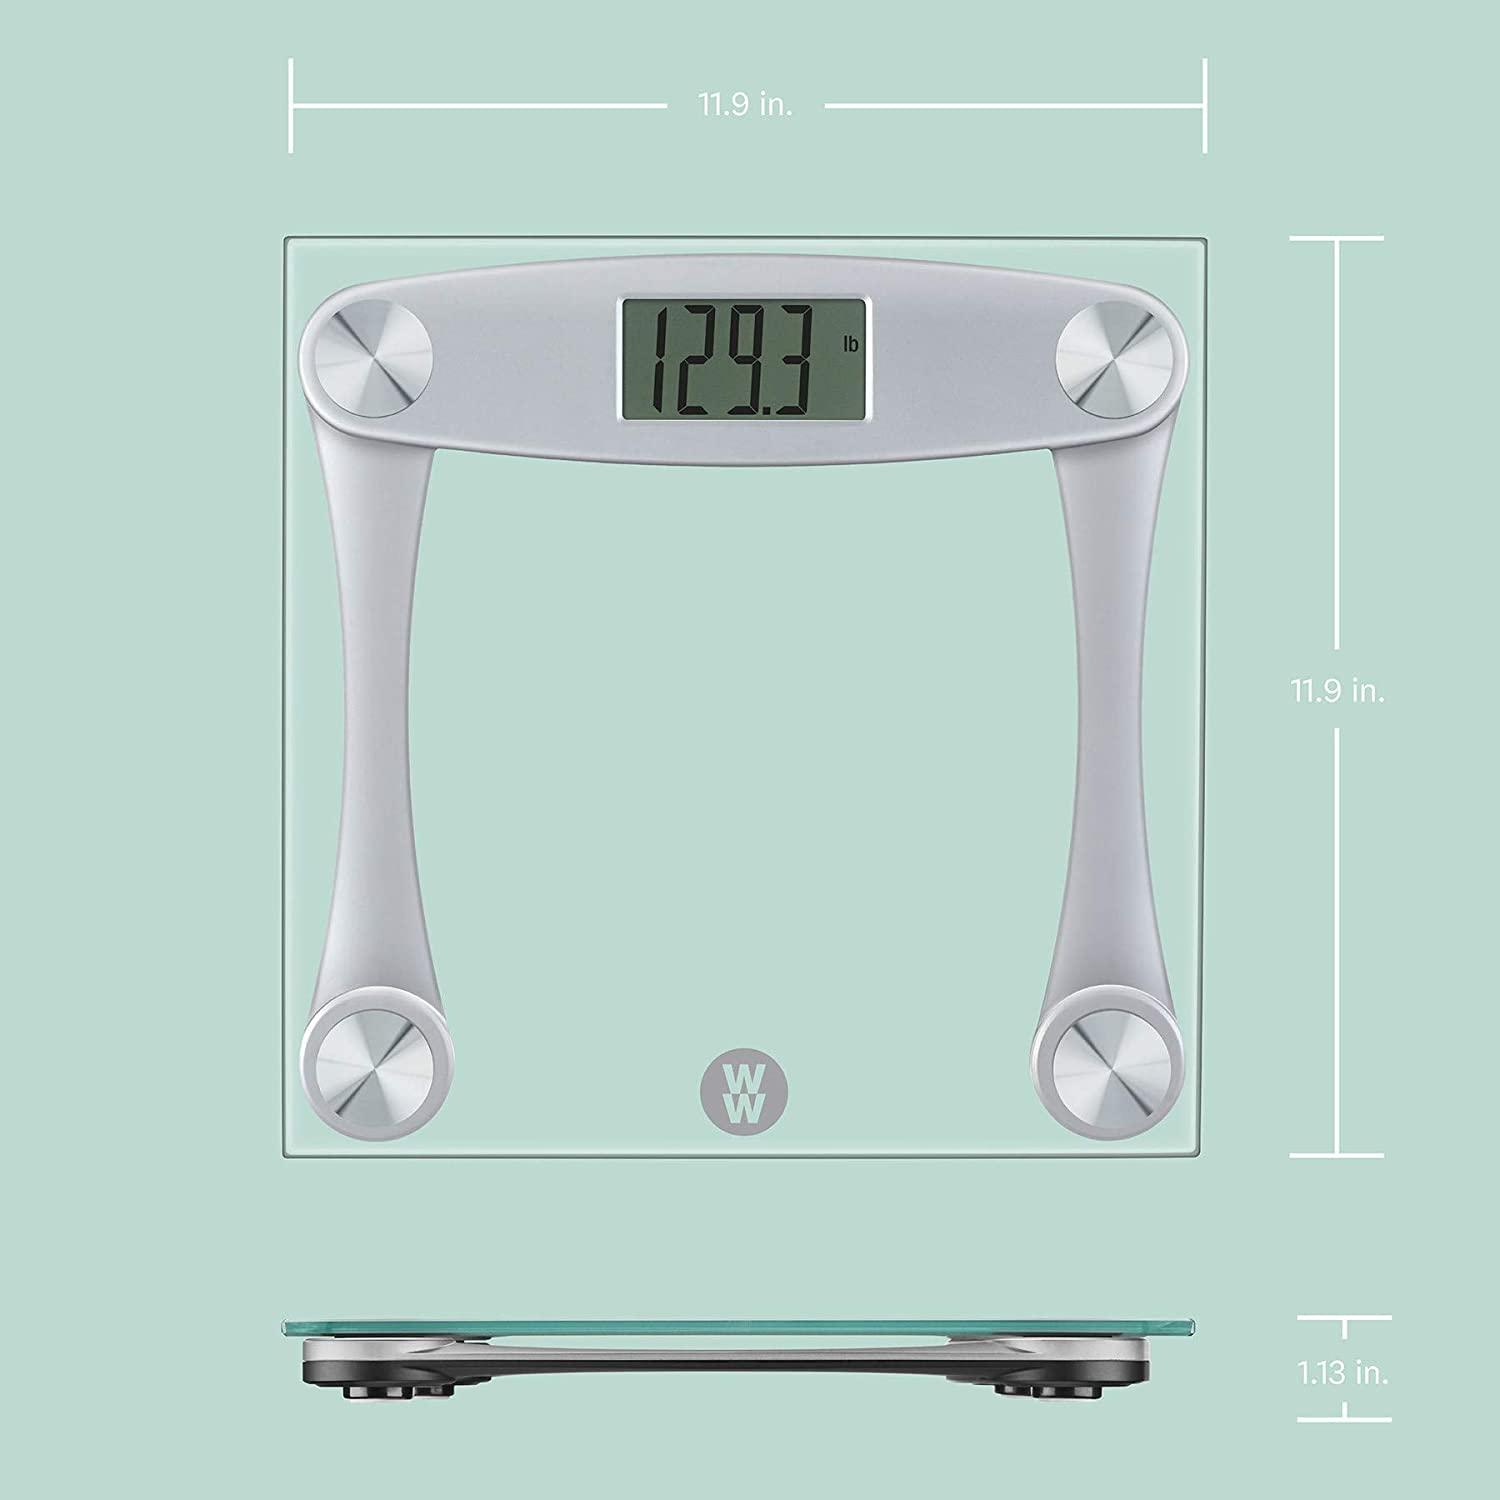 WW Scales by Conair Digital Glass Bathroom Scale 400 Lbs. Capacity Silver  Frame